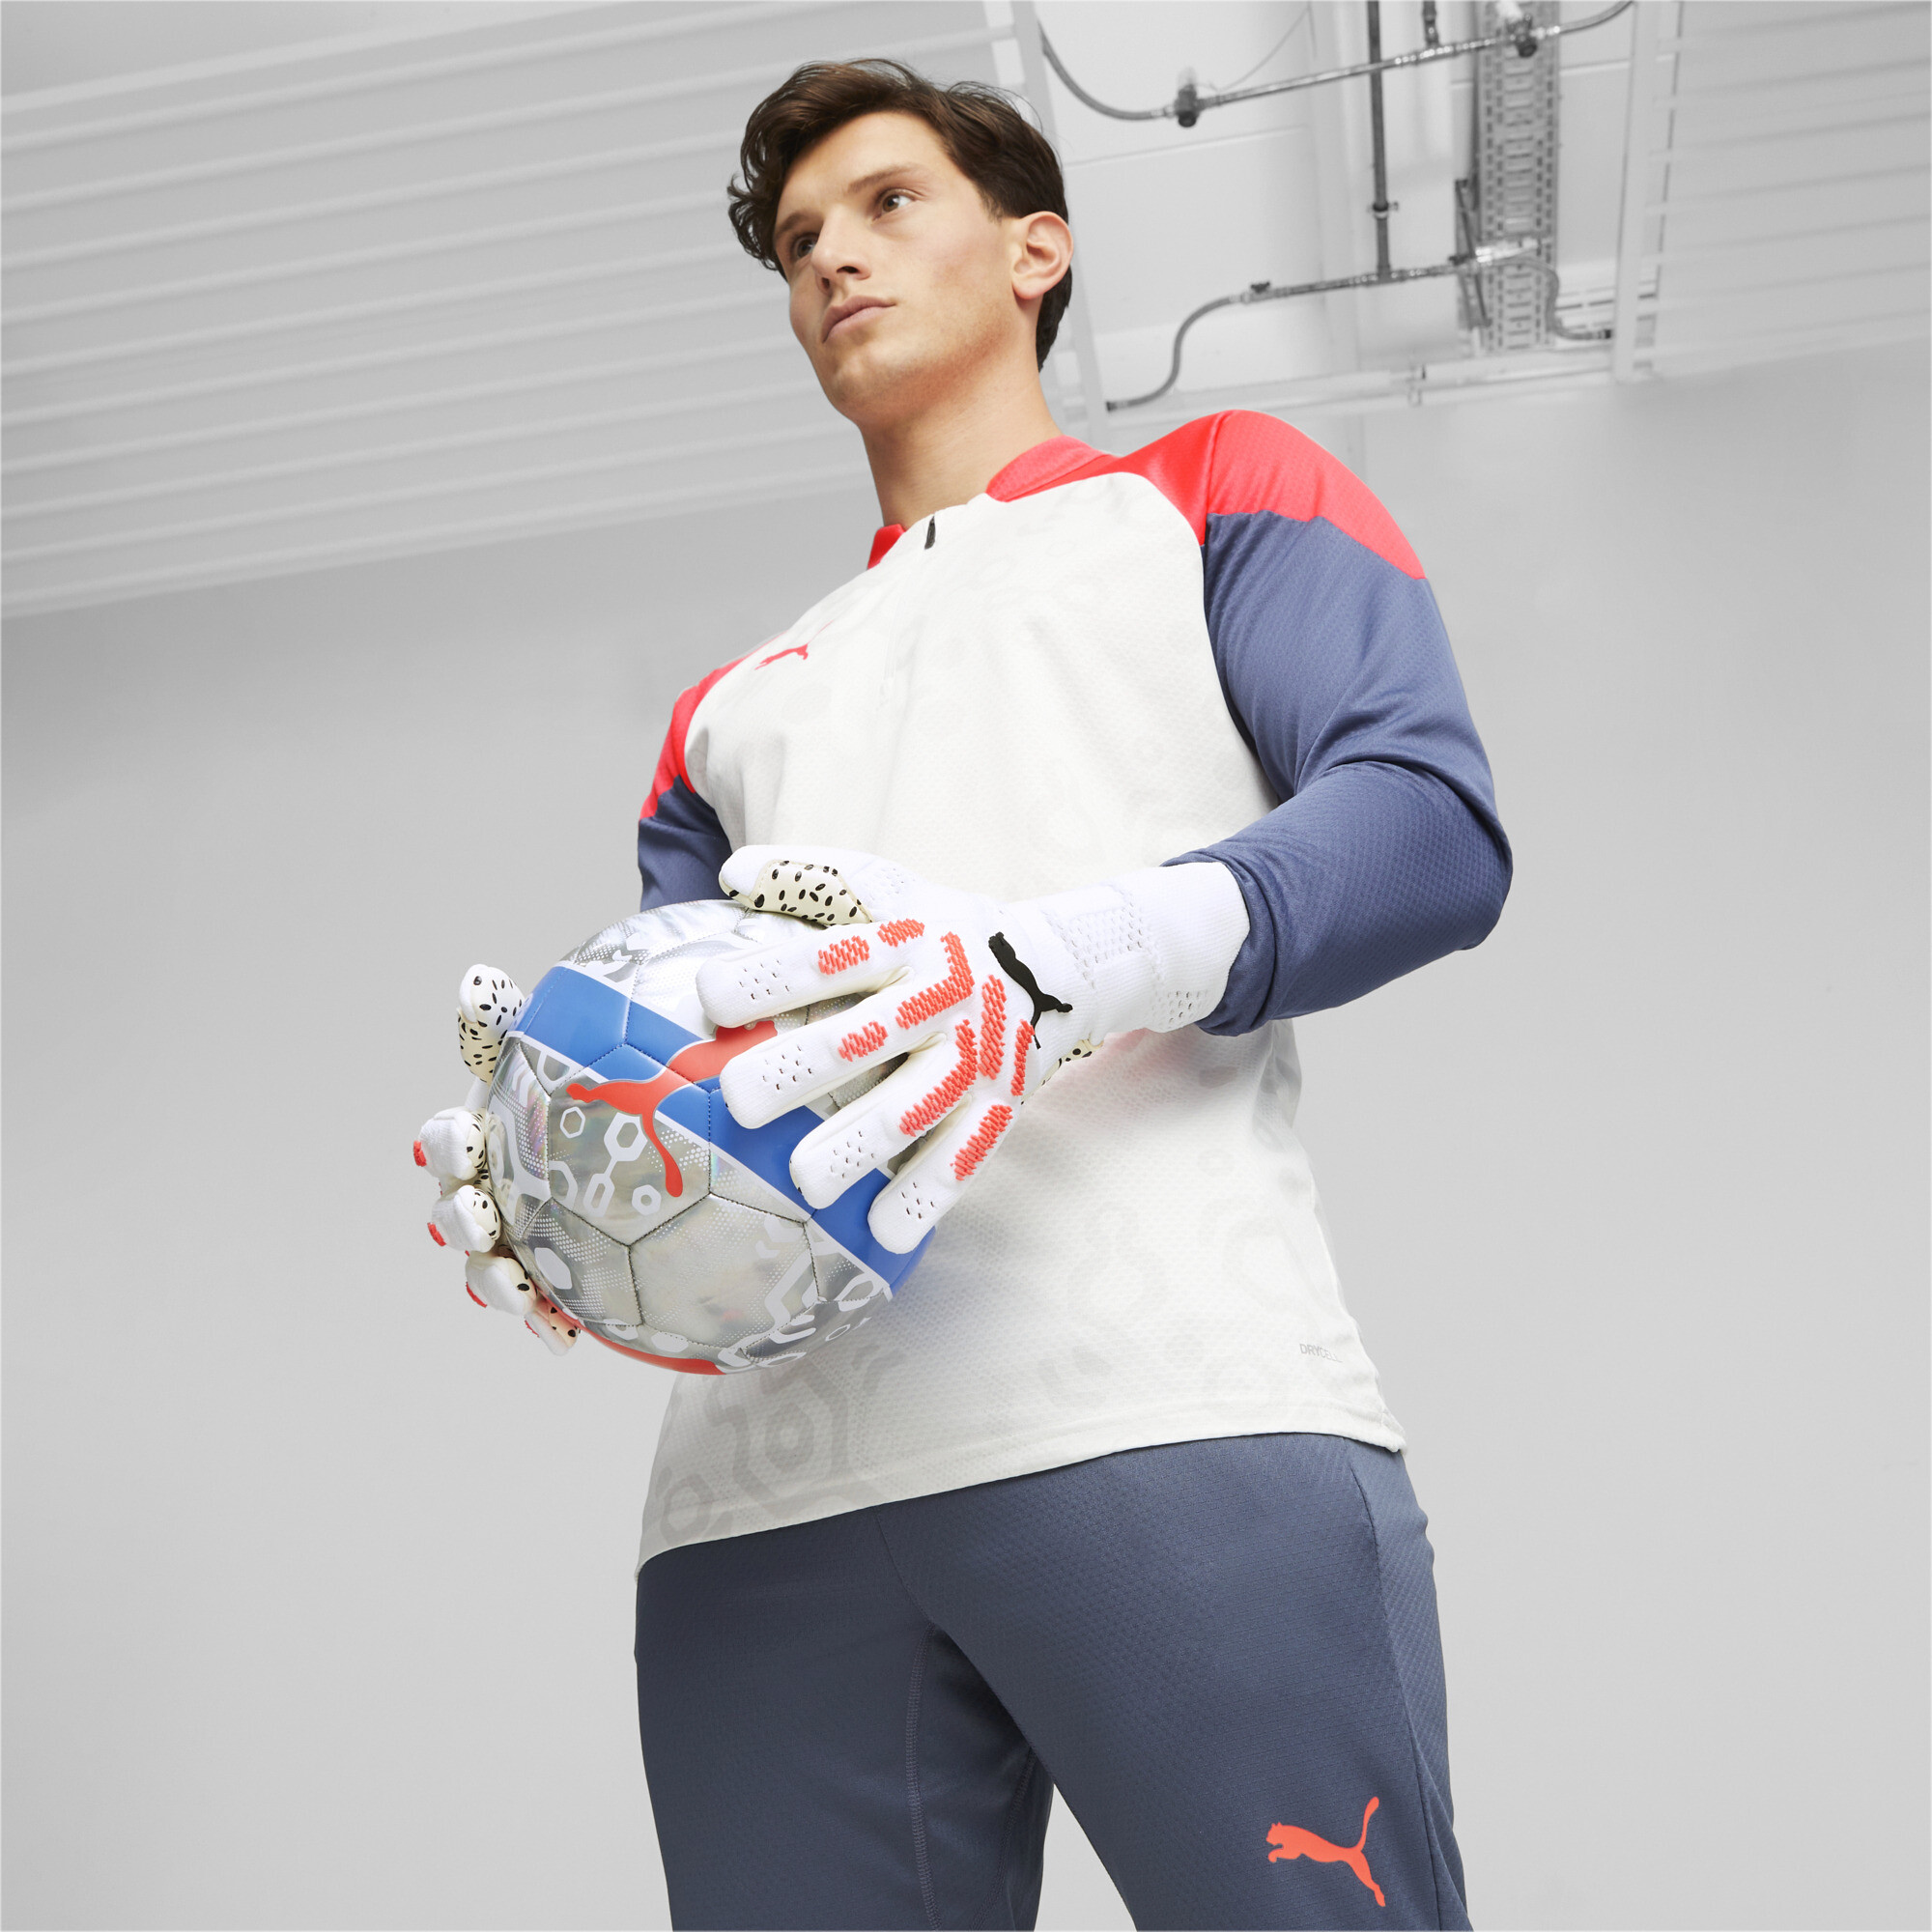 Men's Puma FUTURE Ultimate Negative Cut Football Goalkeeper Gloves, White, Size 7.5, Accessories